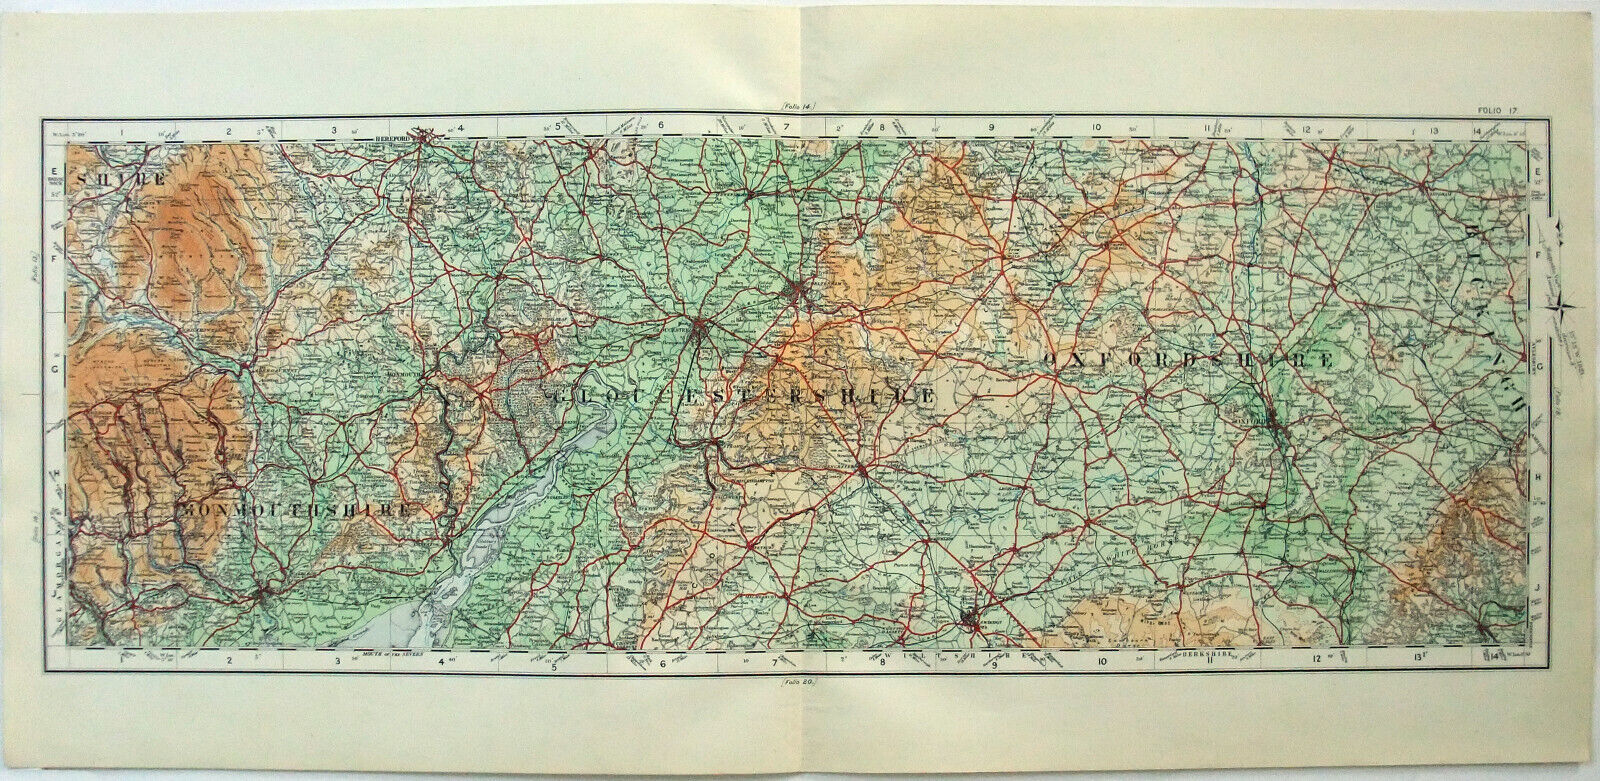 Middlesex Hertfordshire & Essex, England. Original 1922 Ordnance Survey Map. 